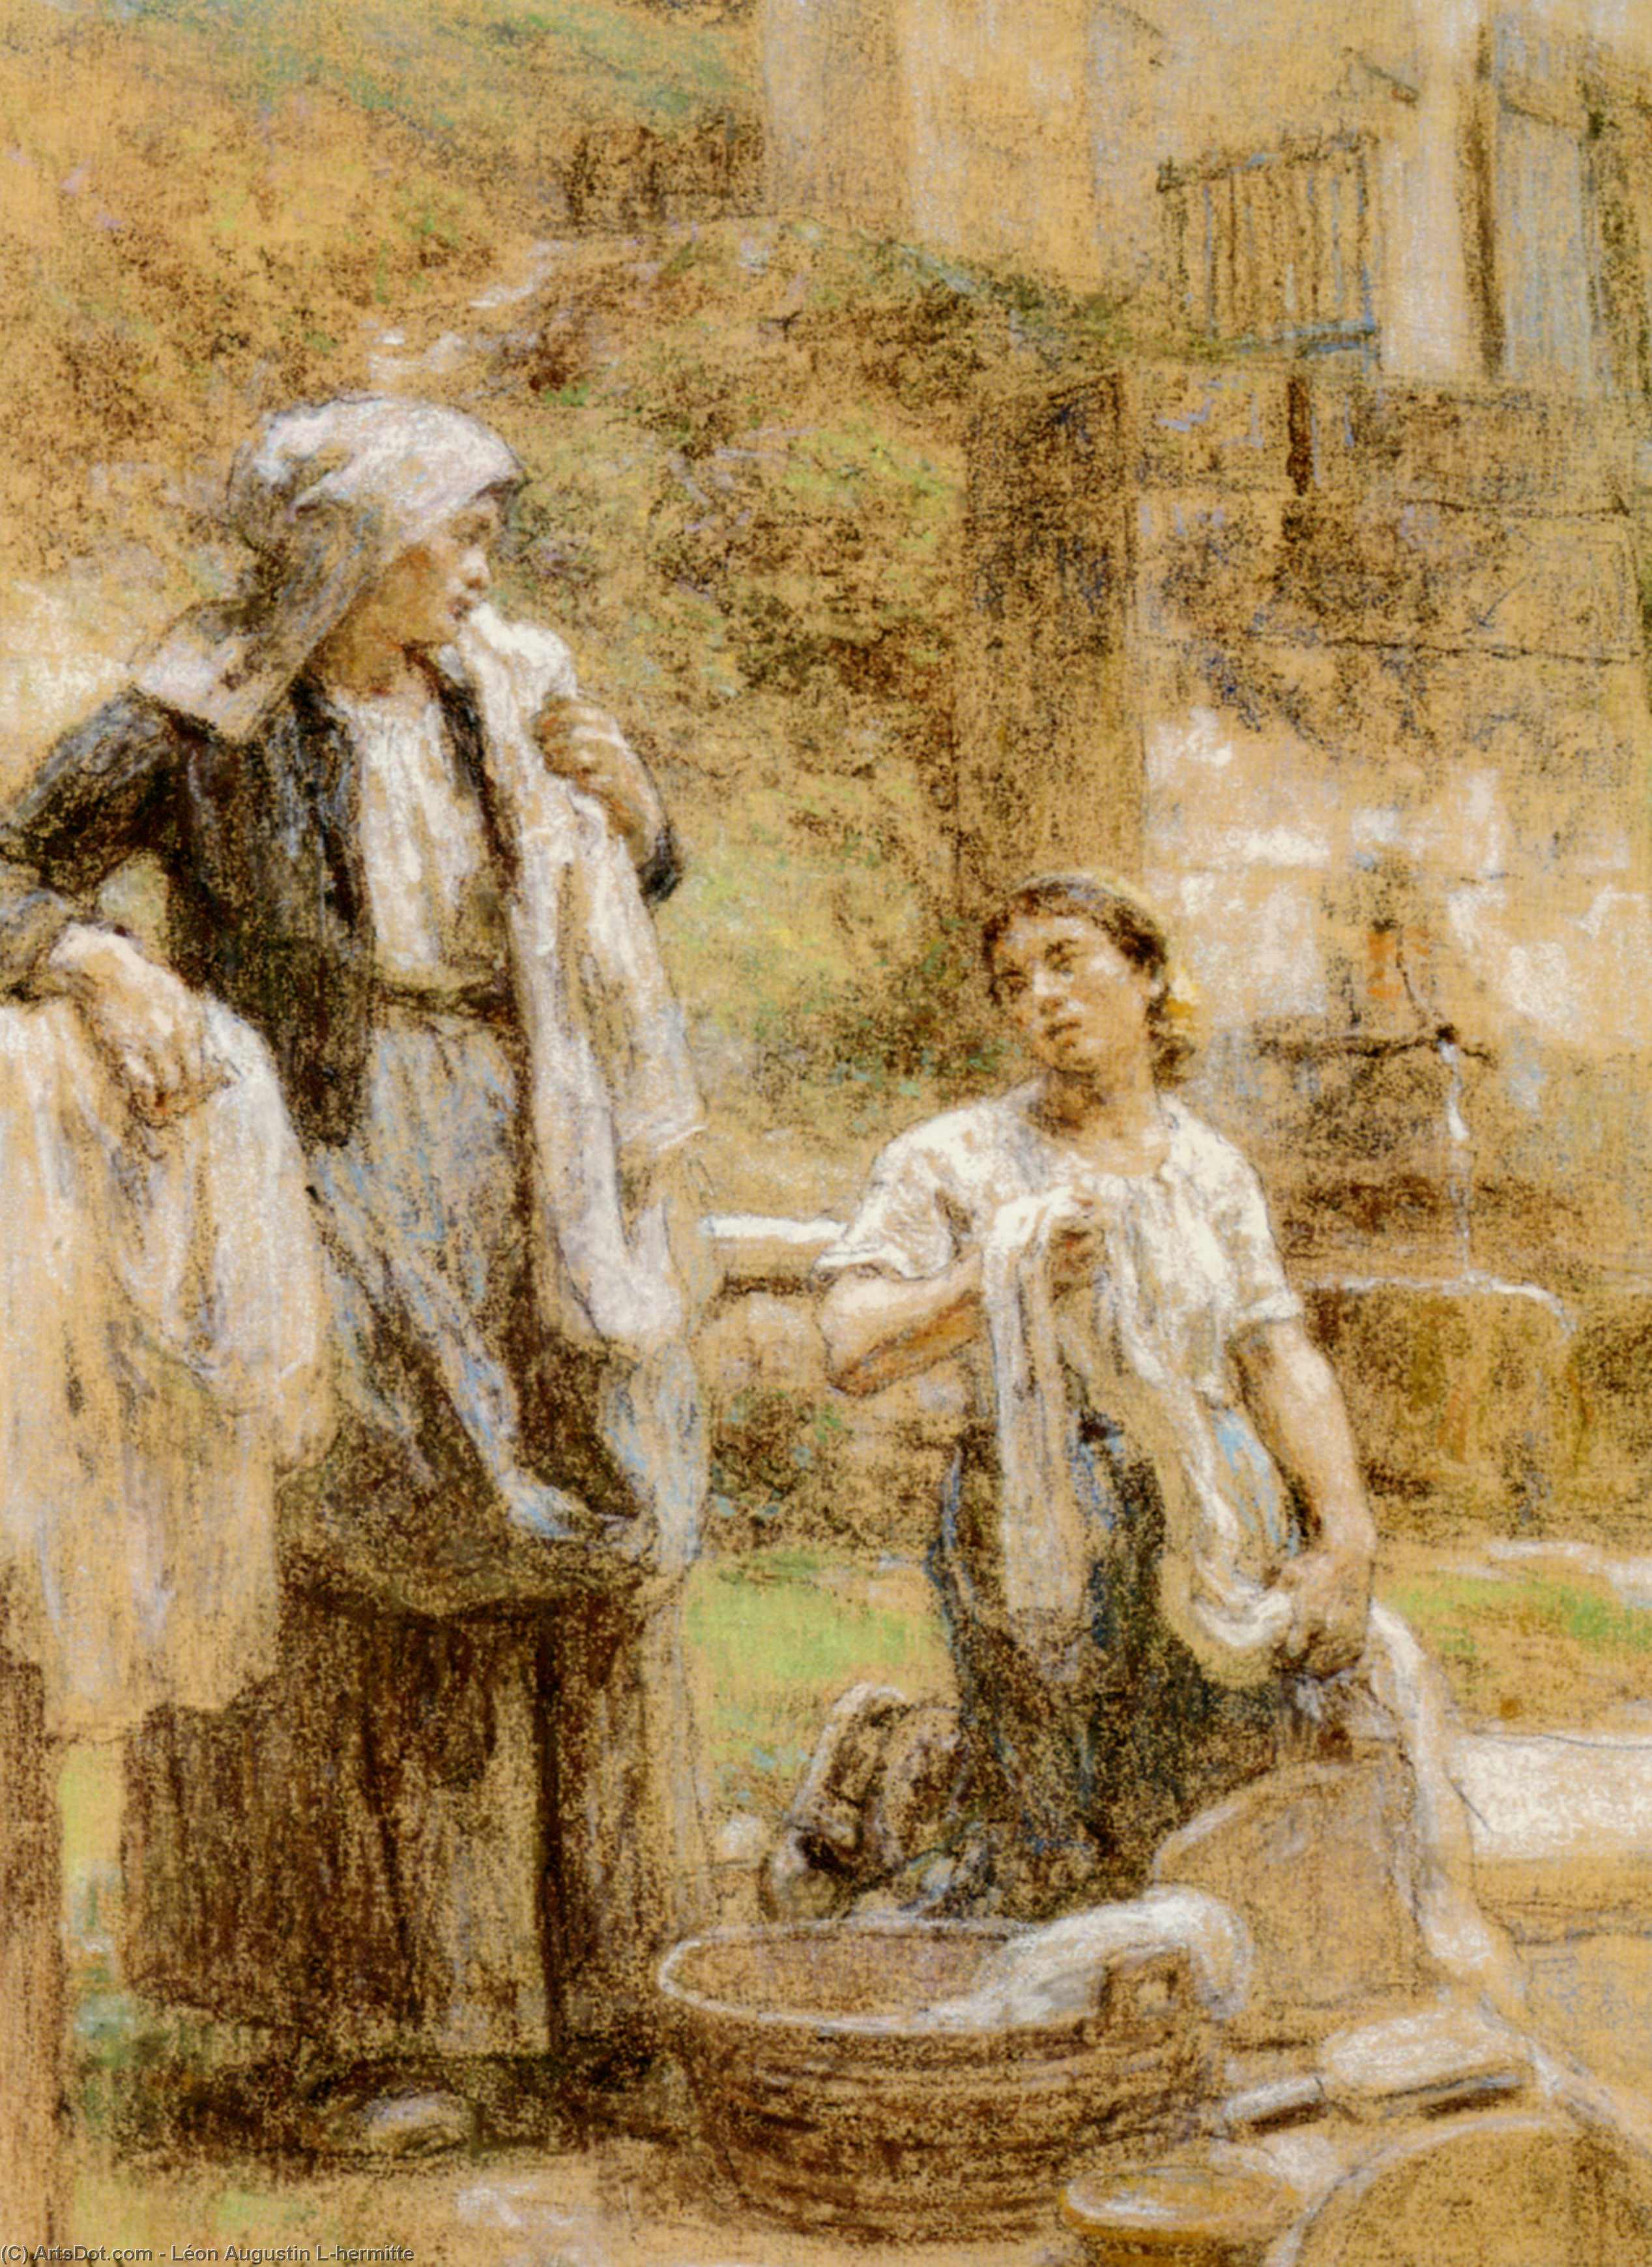 WikiOO.org - Енциклопедія образотворчого мистецтва - Живопис, Картини
 Léon Augustin L'hermitte - The Washerwomen